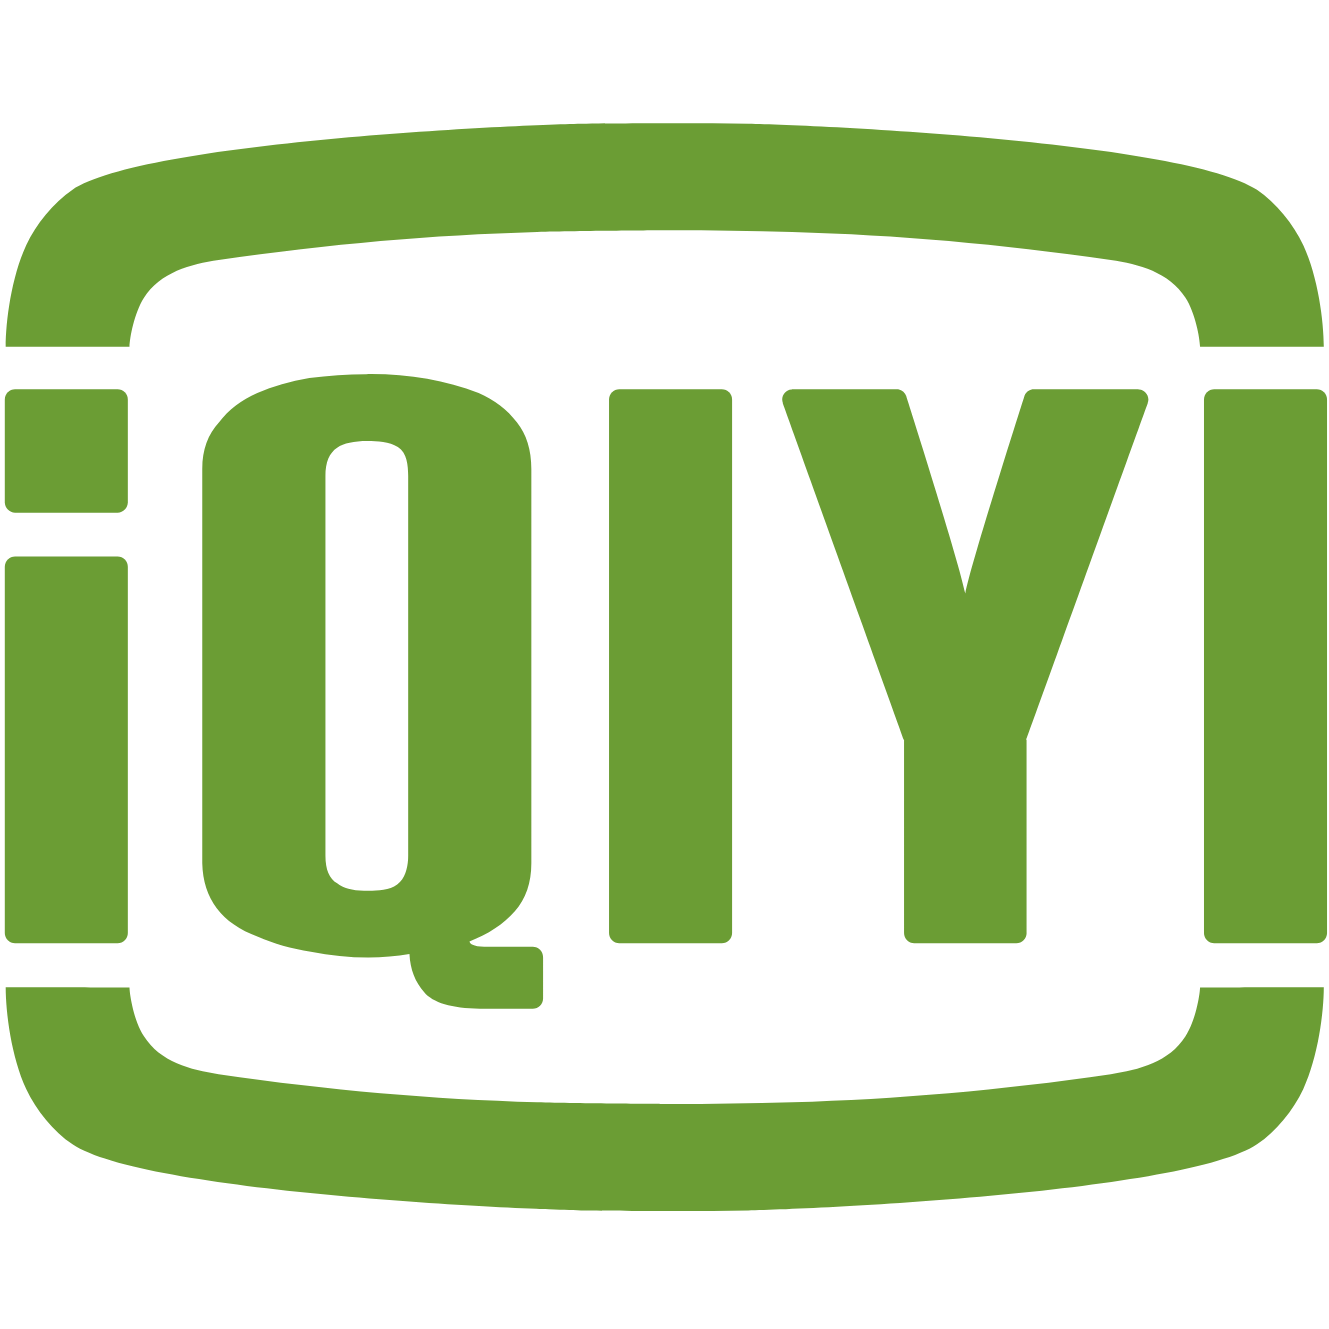 Logo iQIYI